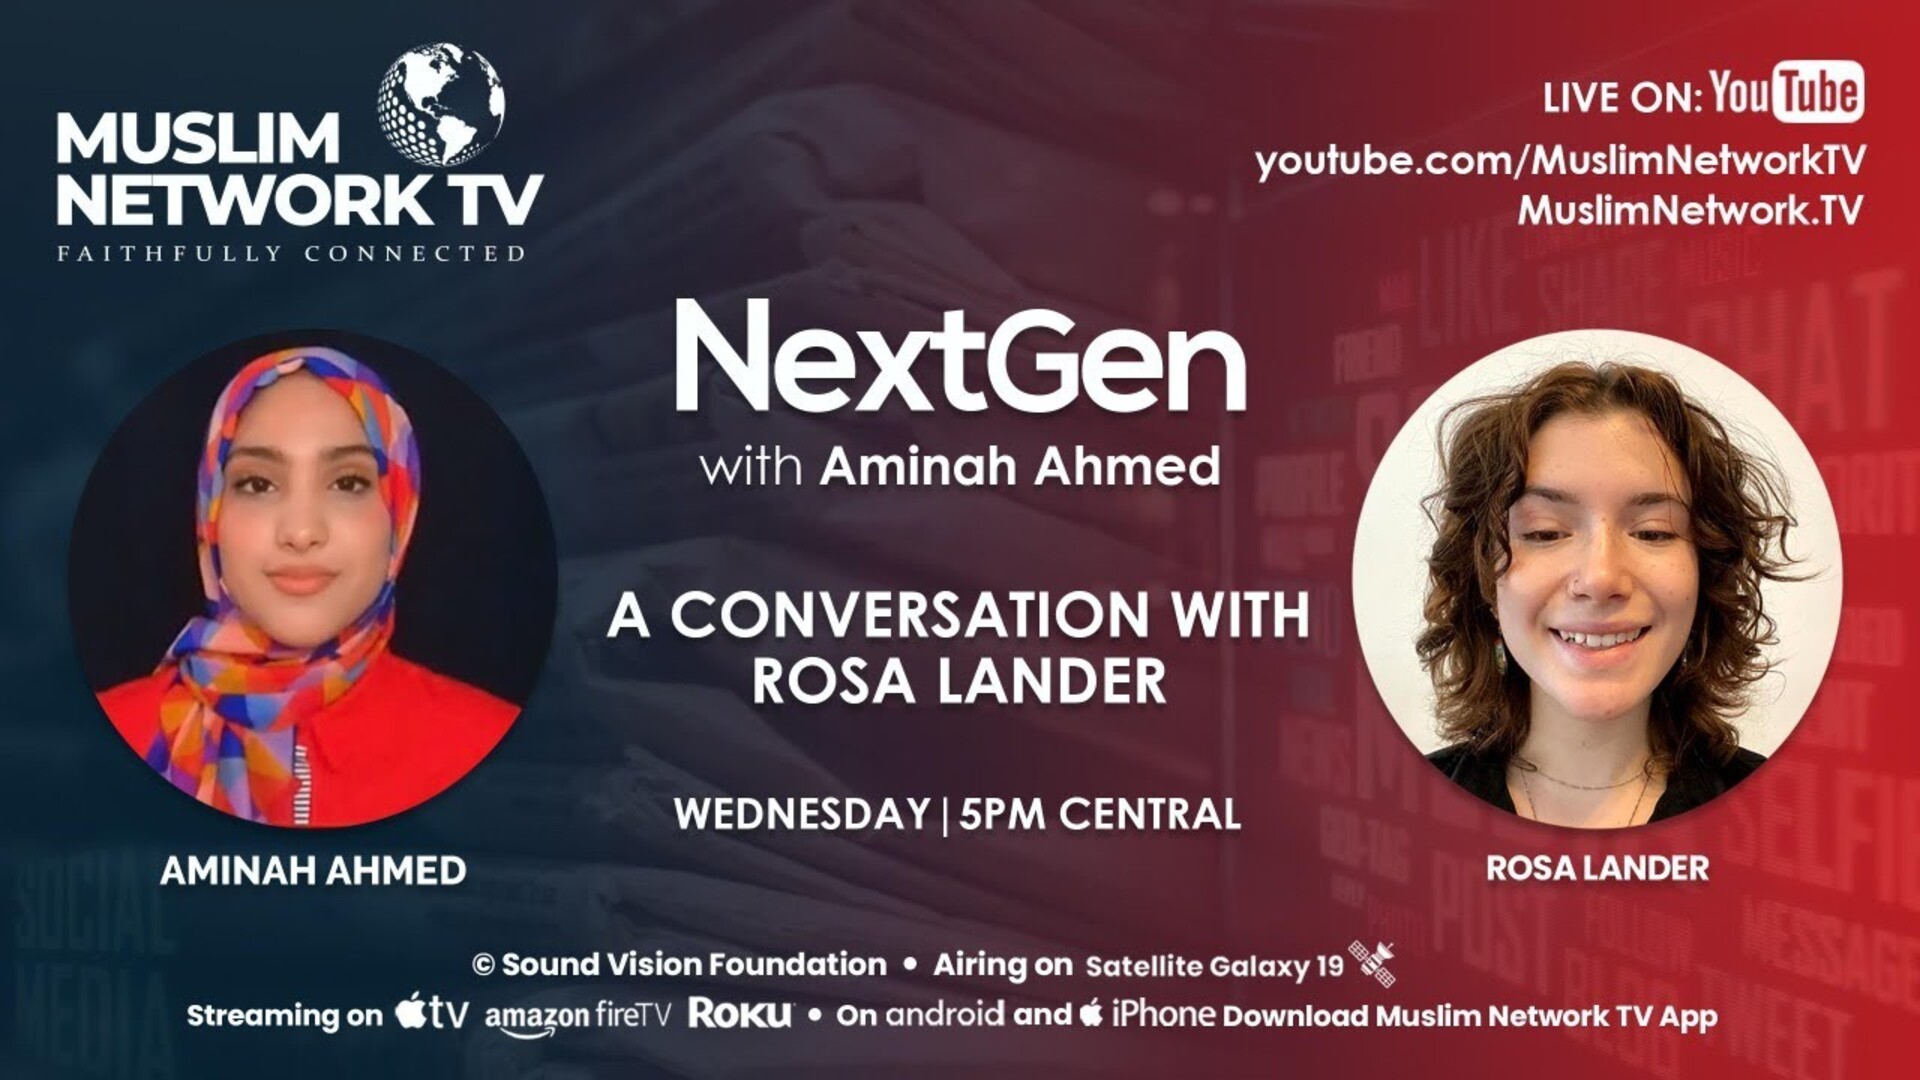 A Conversation with Rosa Lander